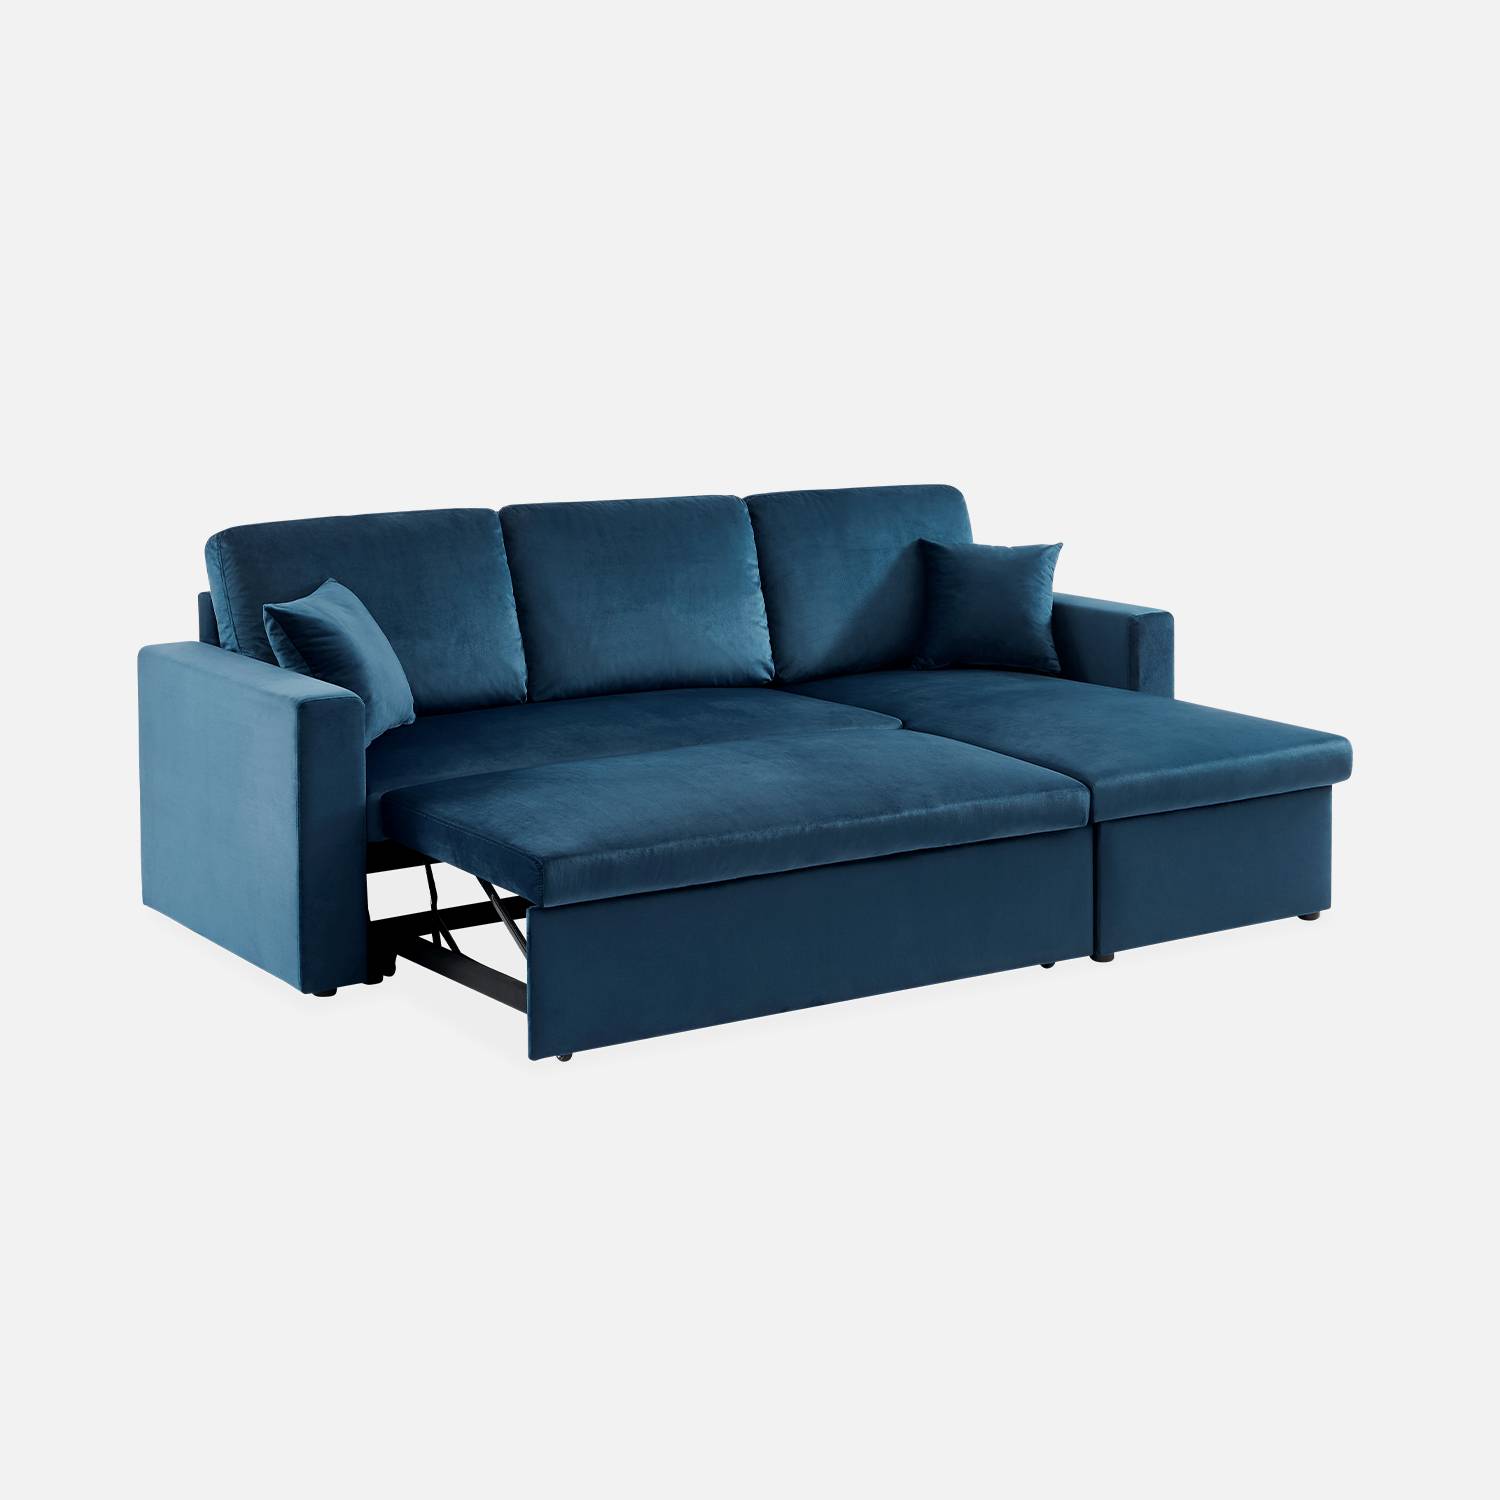 Petroleumblauwe velours bedbank met chaise longue en opbergruimte - IDA - 3-zits, omkeerbare hoeksalon, opbergruimte, zetelbed,sweeek,Photo8